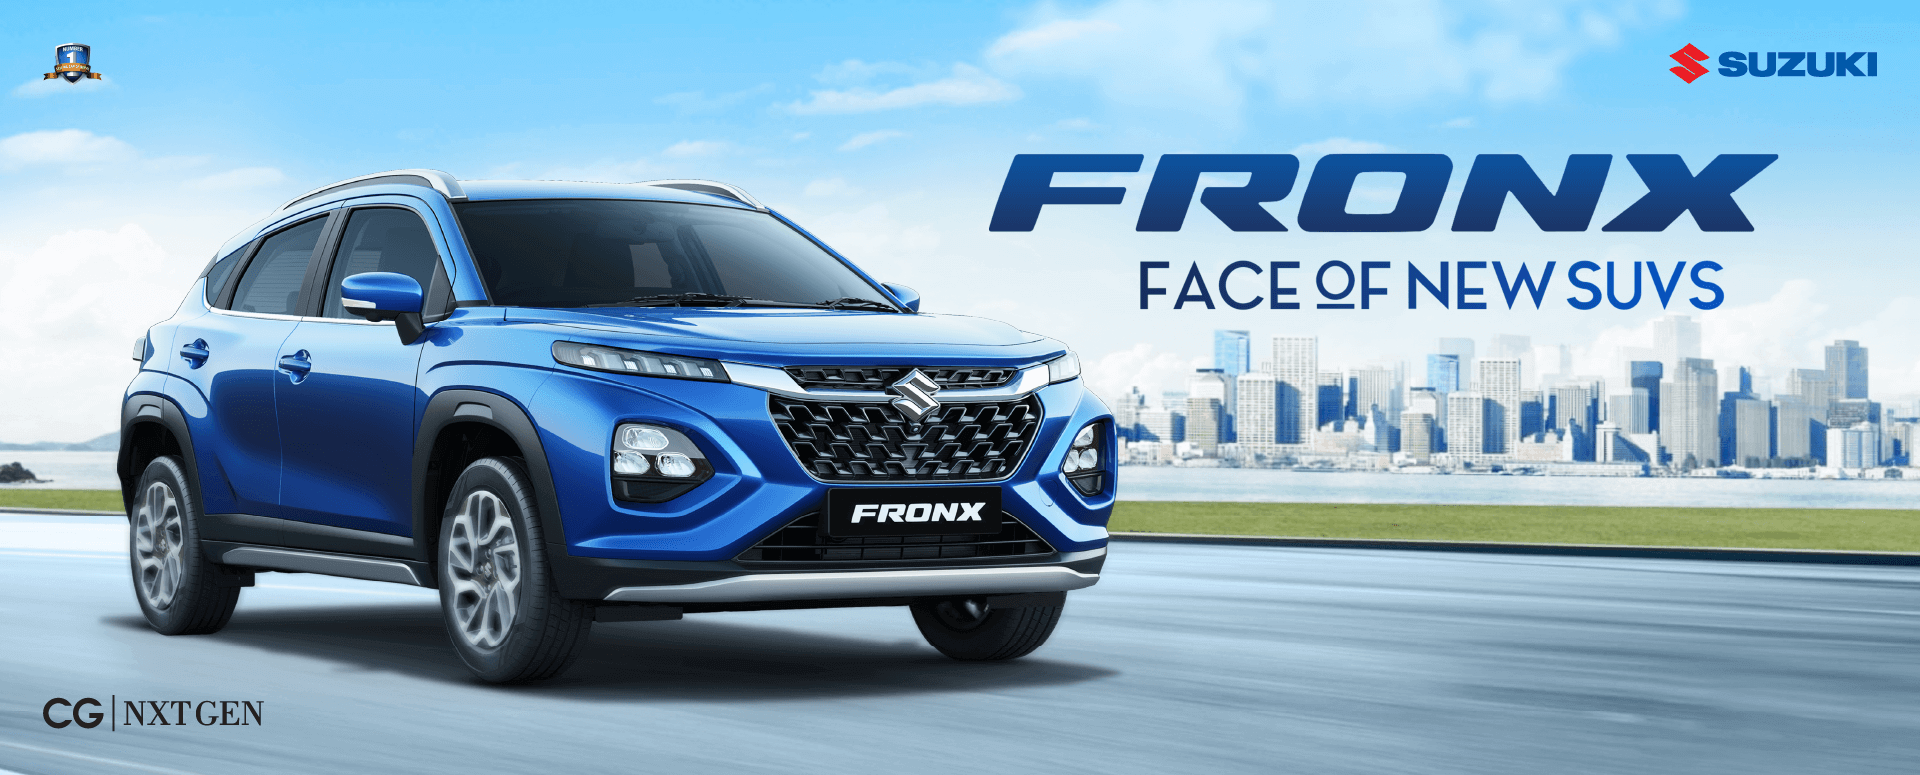 Suzuki Fronx price nepal